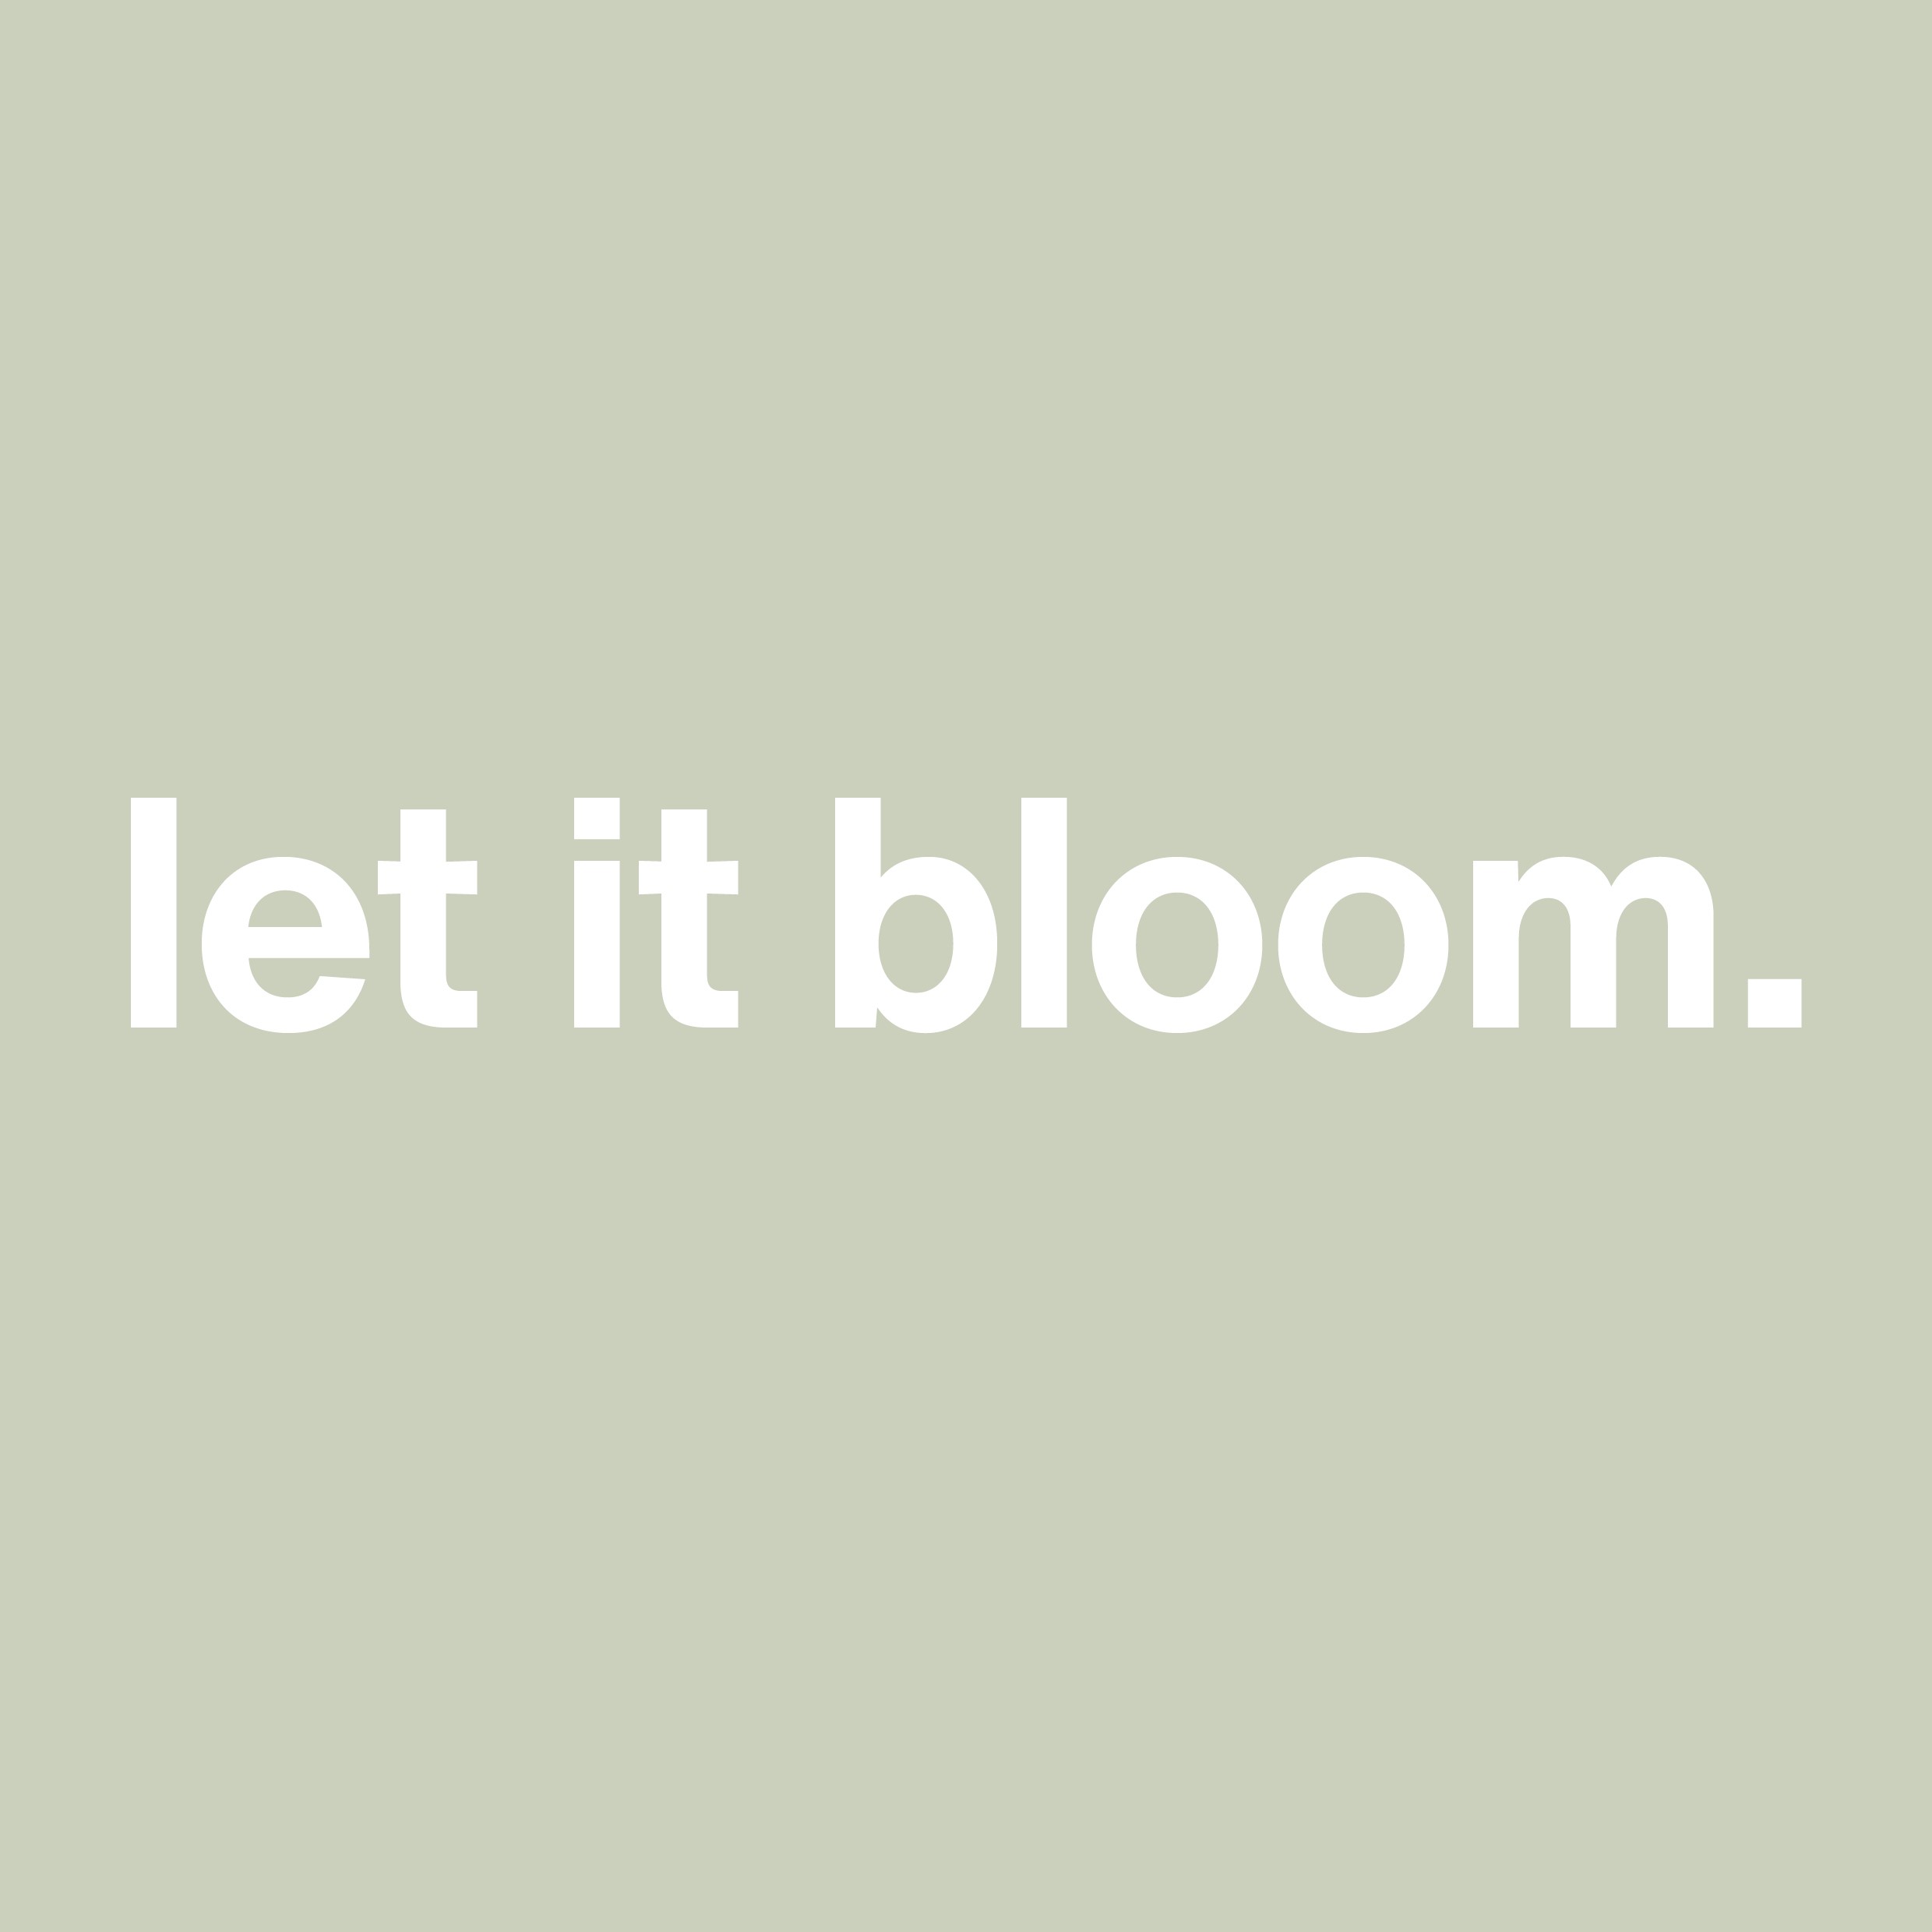 let it bloom